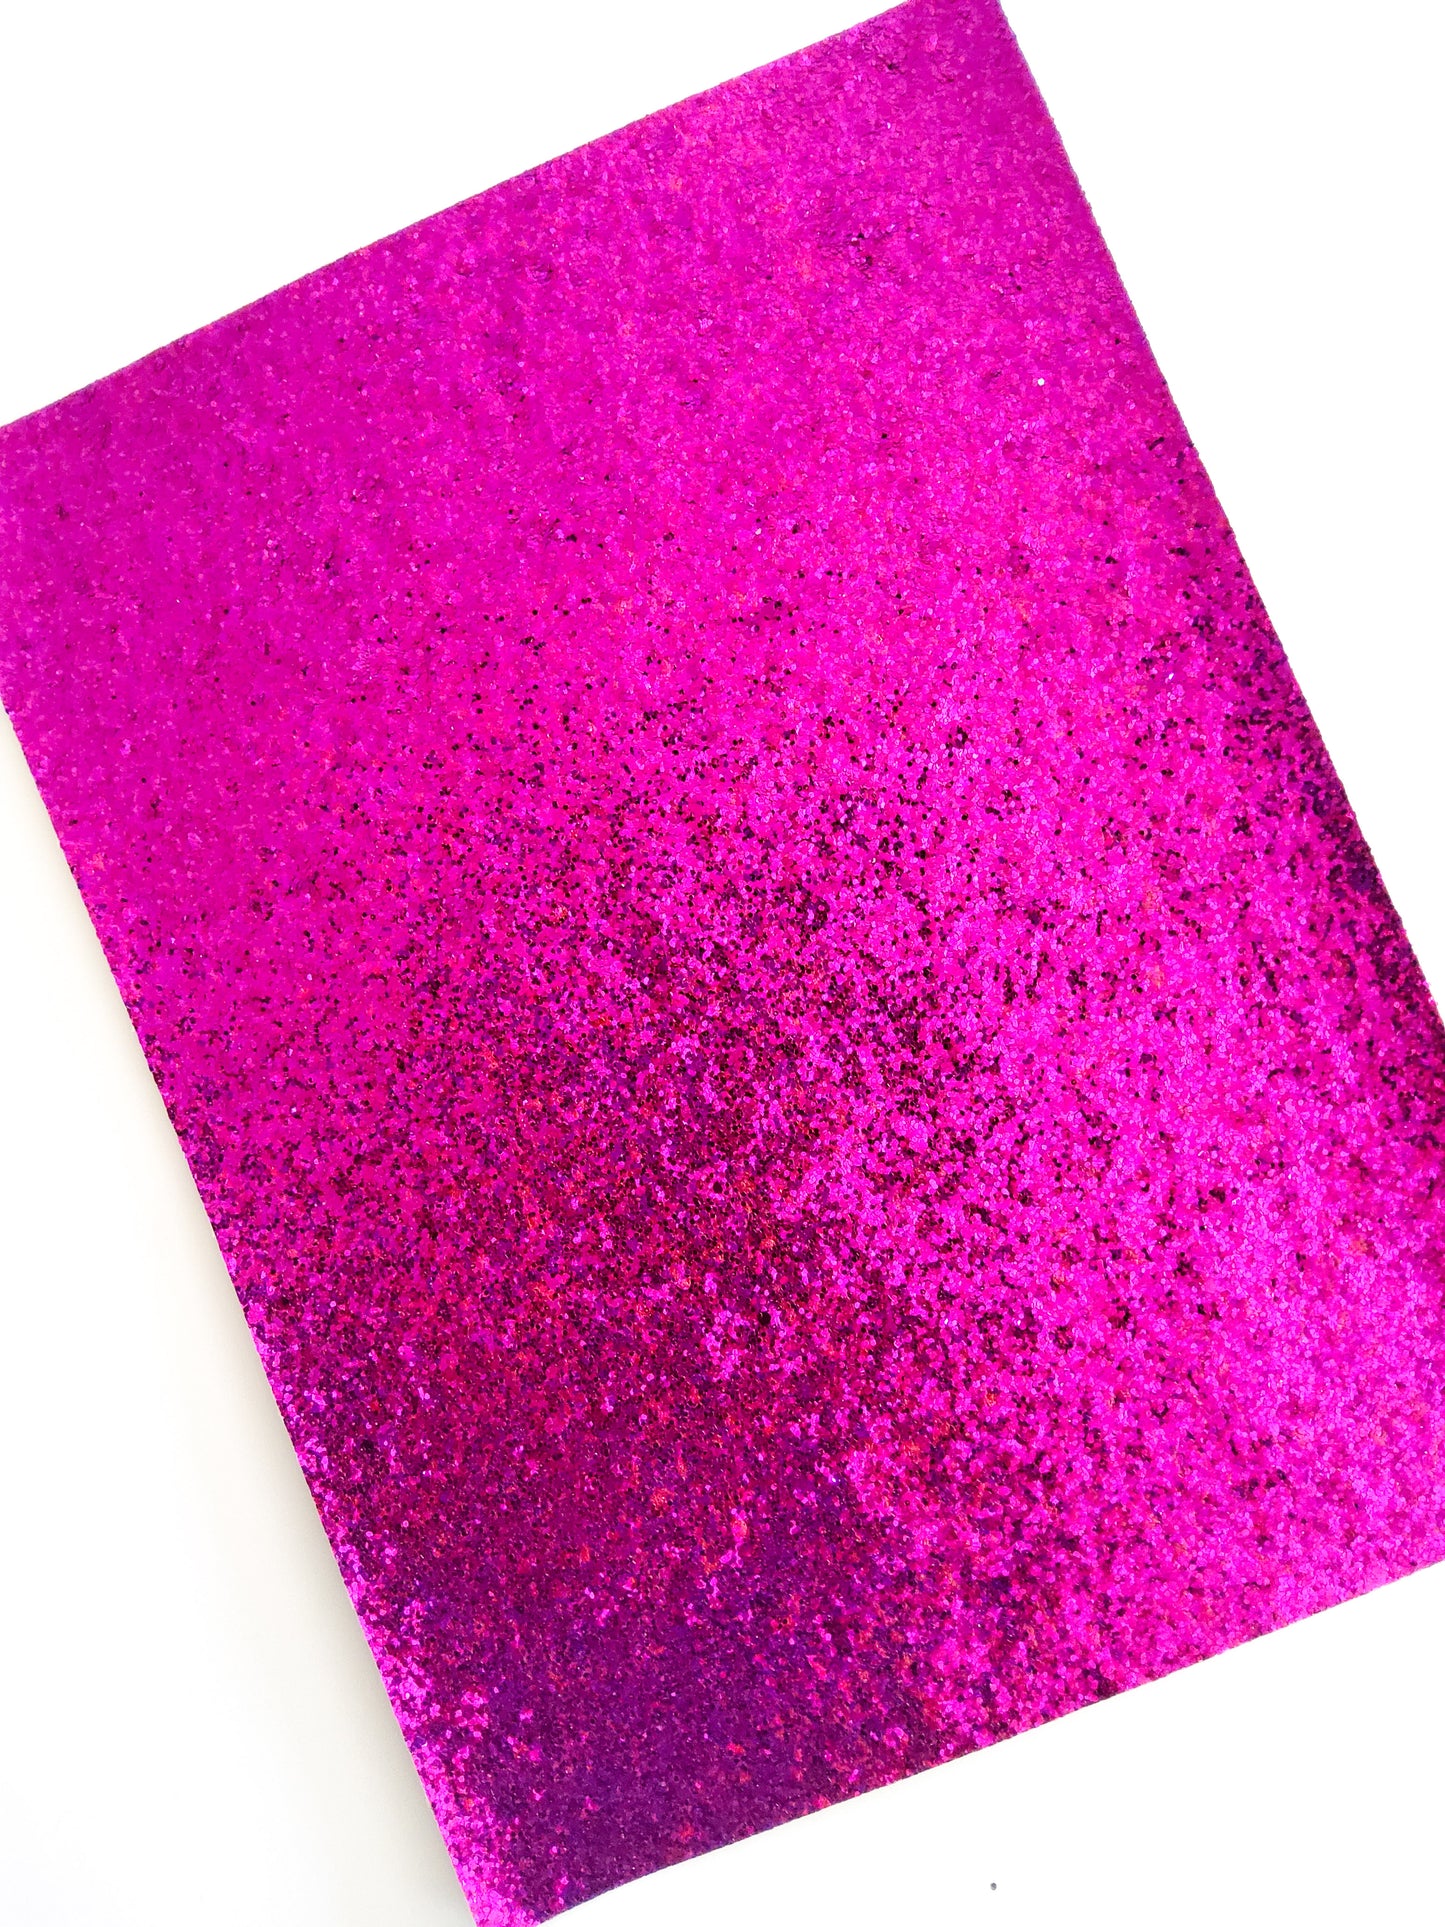 Dark Pink Chunky Glitter 9x12 thin faux leather sheet